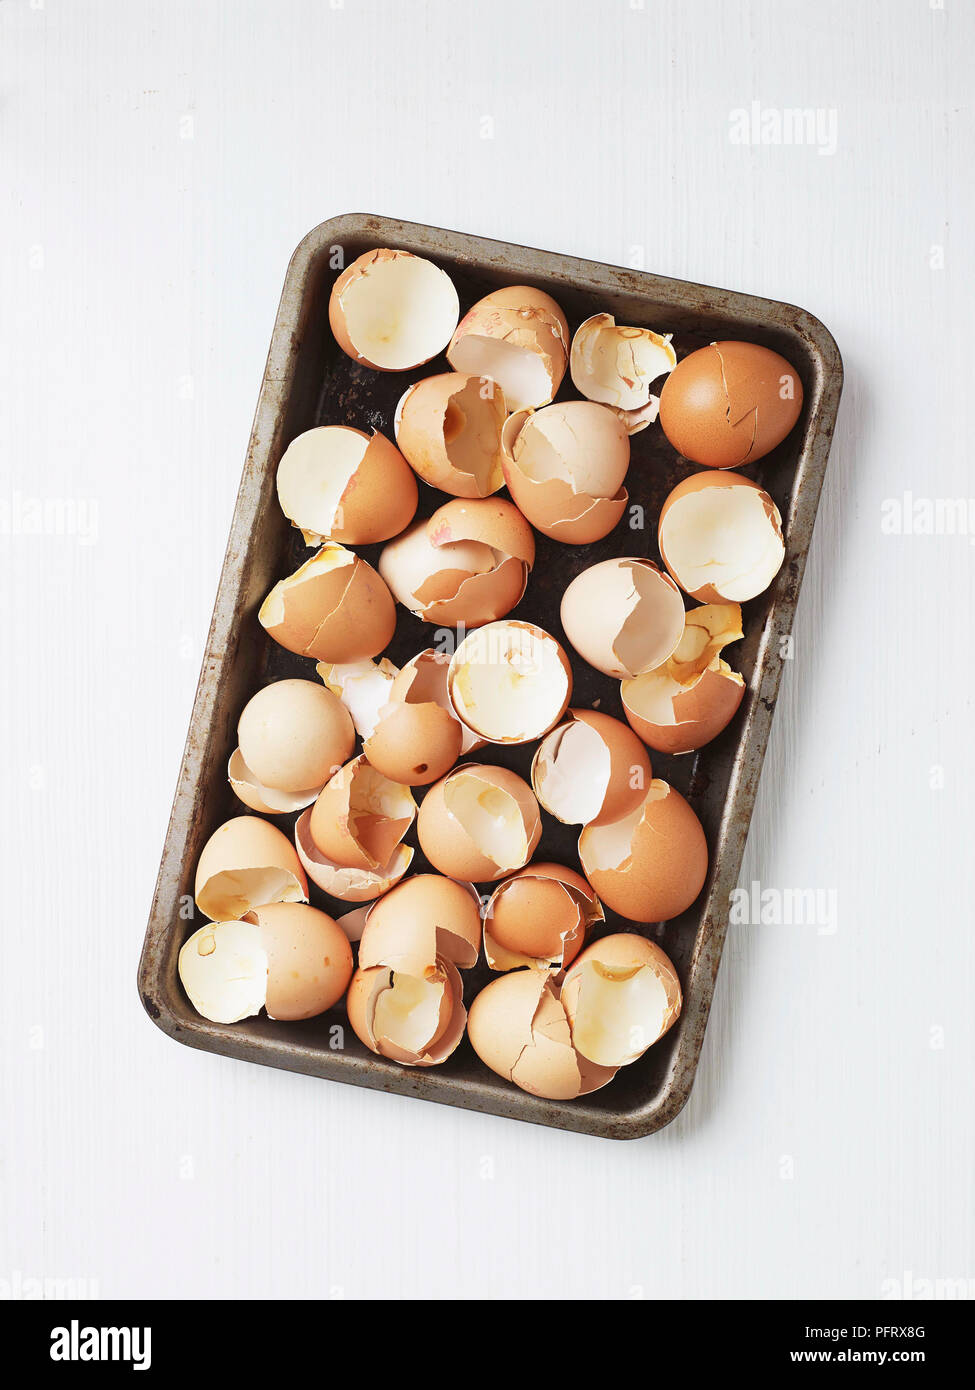 Cleaned eggshells on a baking tray to make eggshell powder Stock Photo